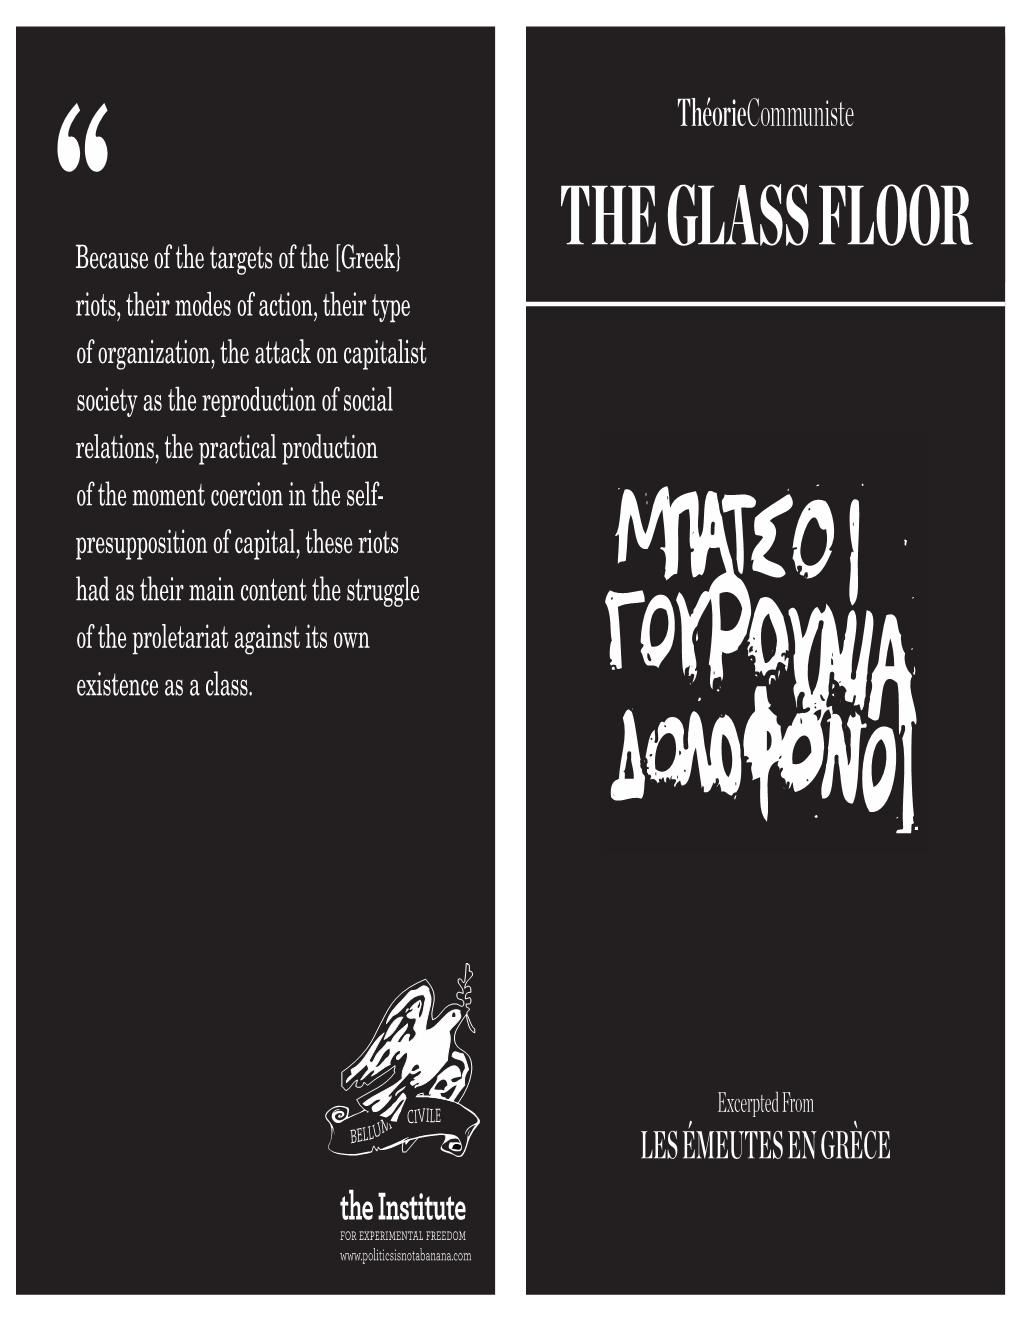 The Glass Floor